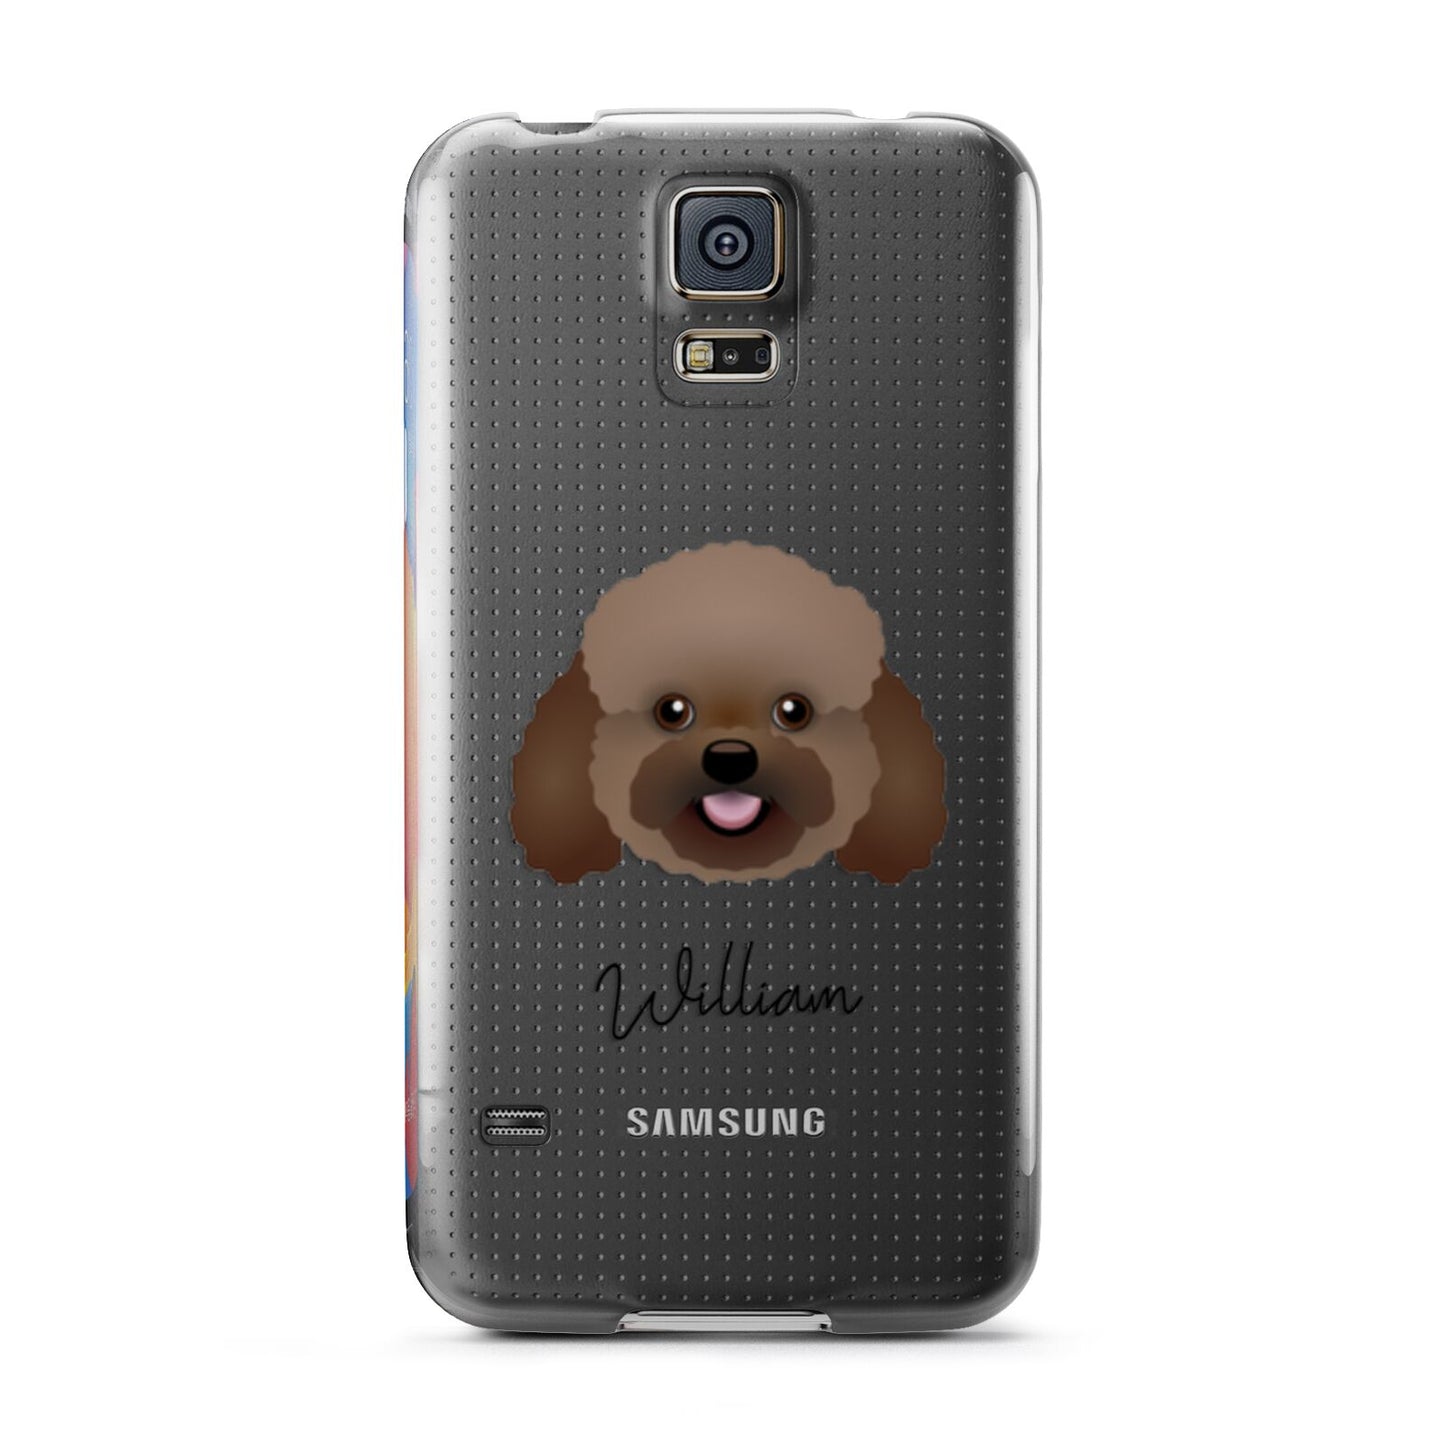 Bich poo Personalised Samsung Galaxy S5 Case